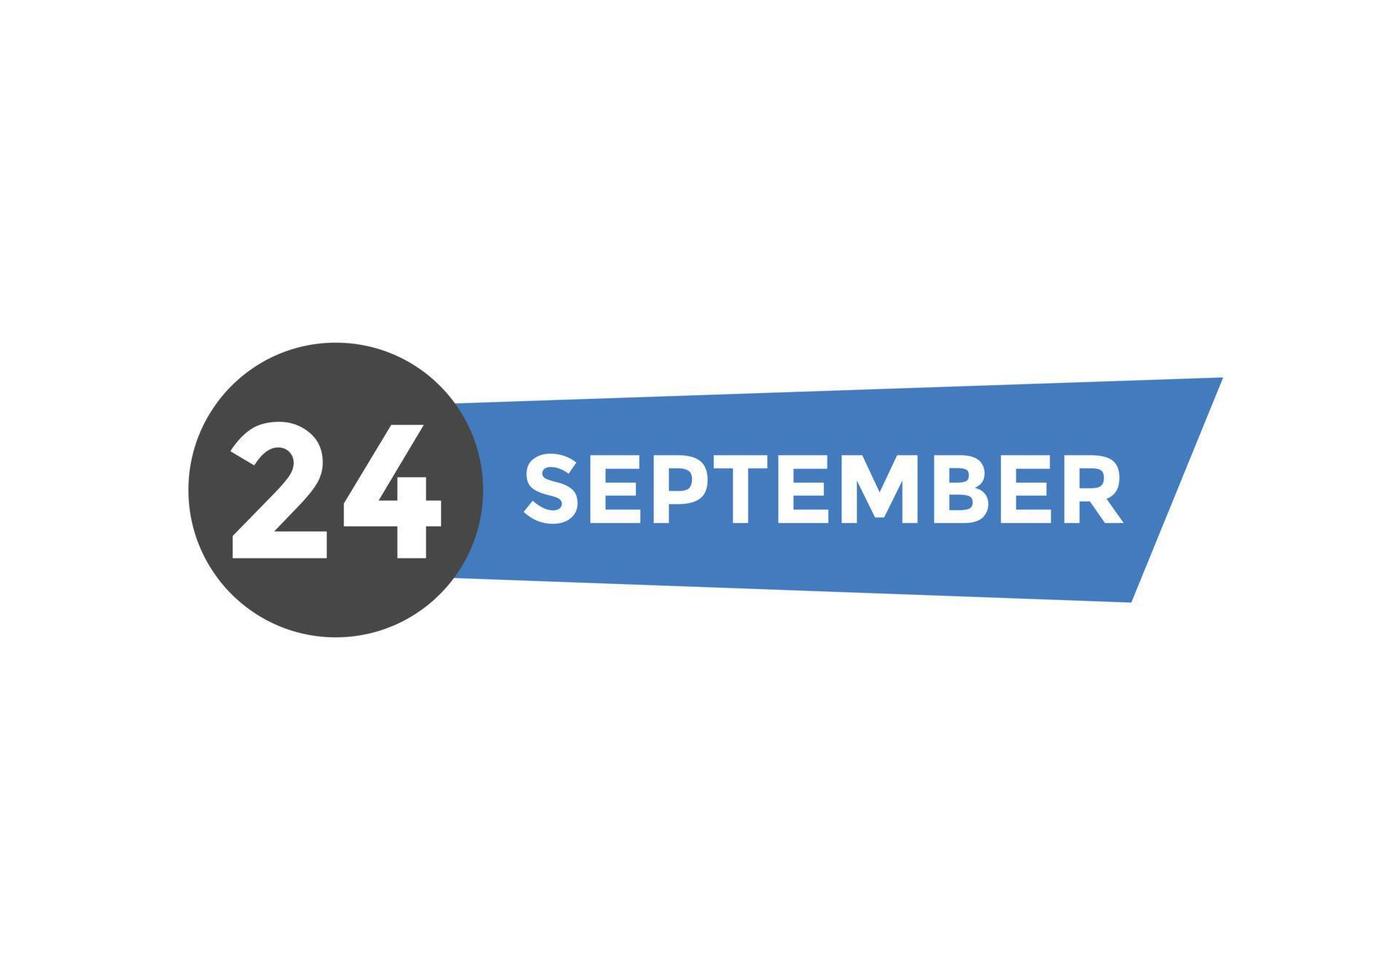 september 24 calendar reminder. 24th september daily calendar icon template. Calendar 24th september icon Design template. Vector illustration